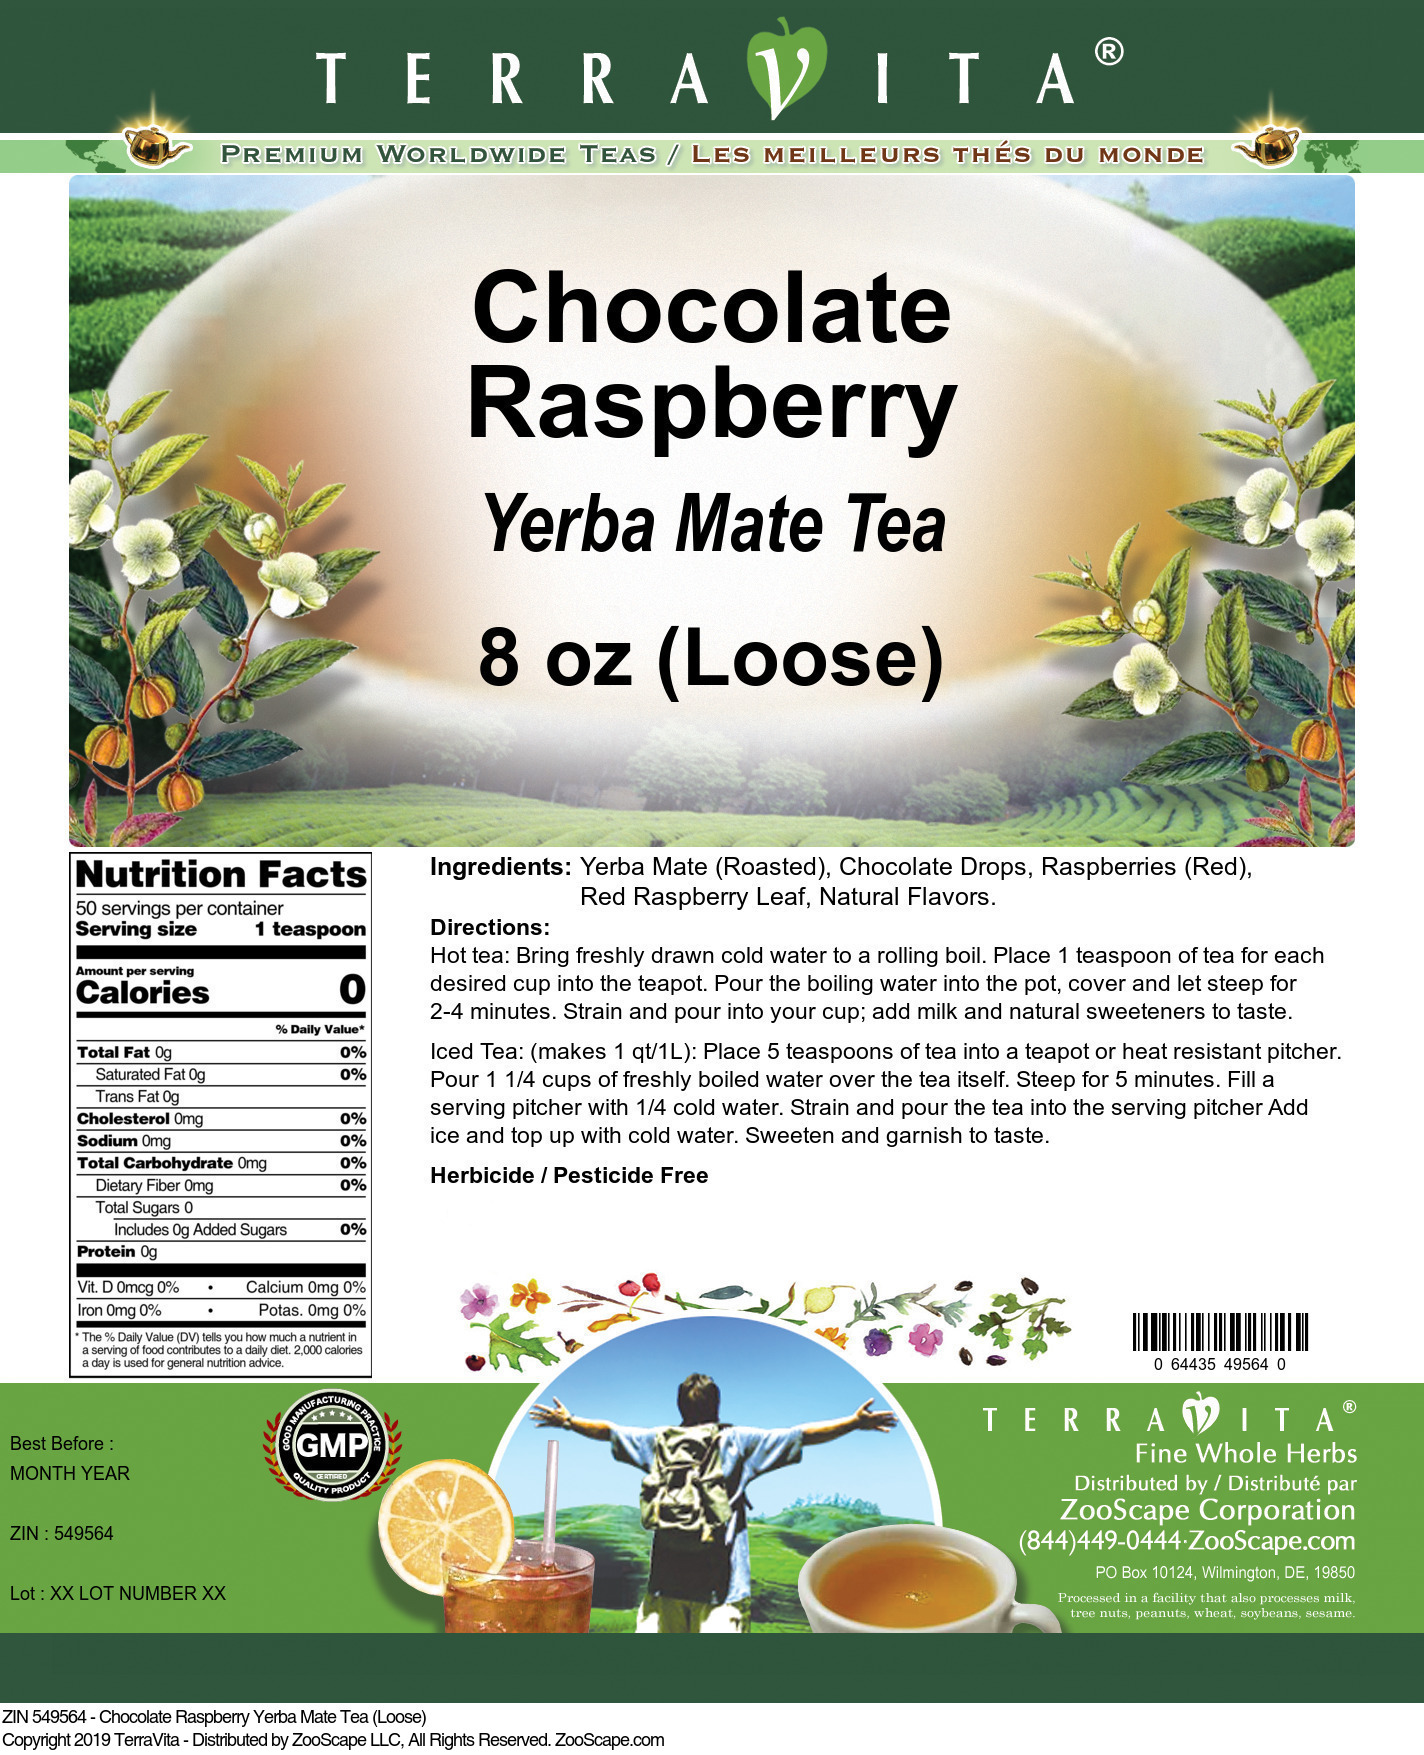 Chocolate Raspberry Yerba Mate Tea (Loose) - Label